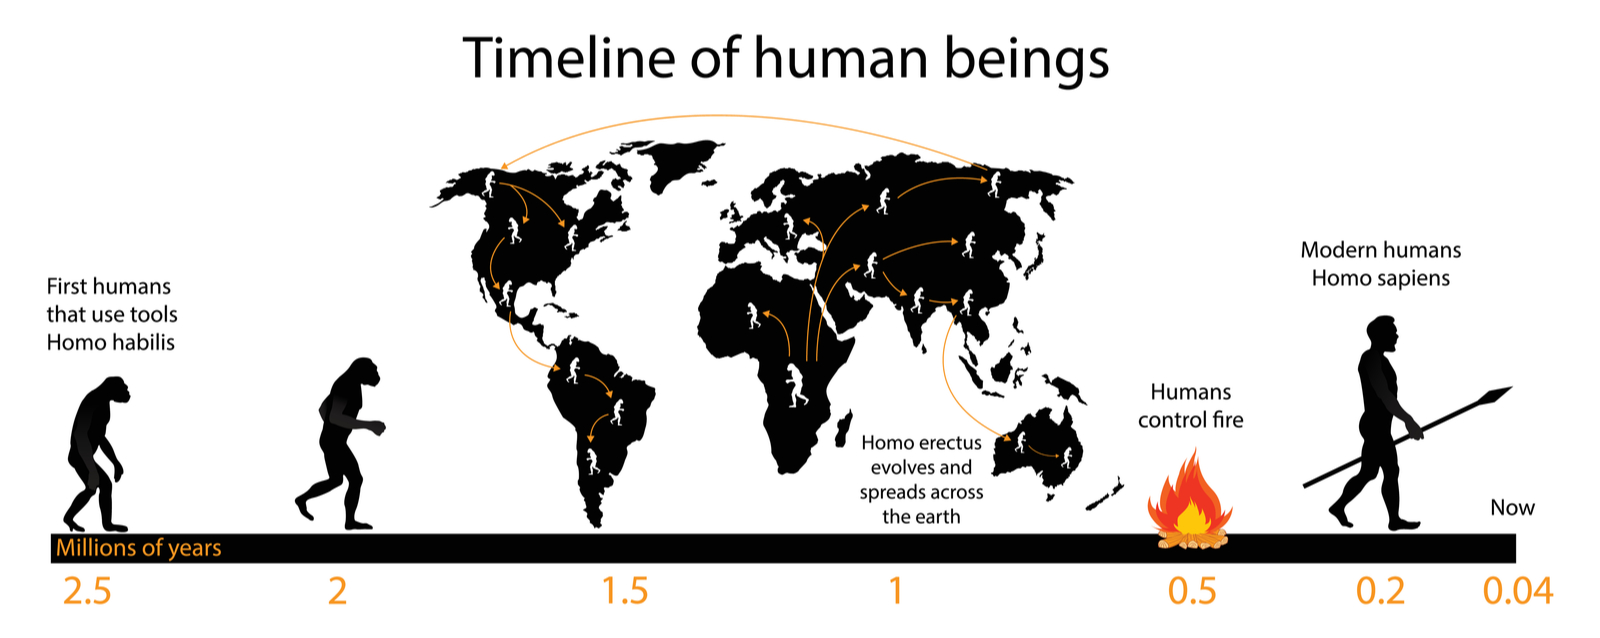 Timeline of hominid evolution and migration patterns